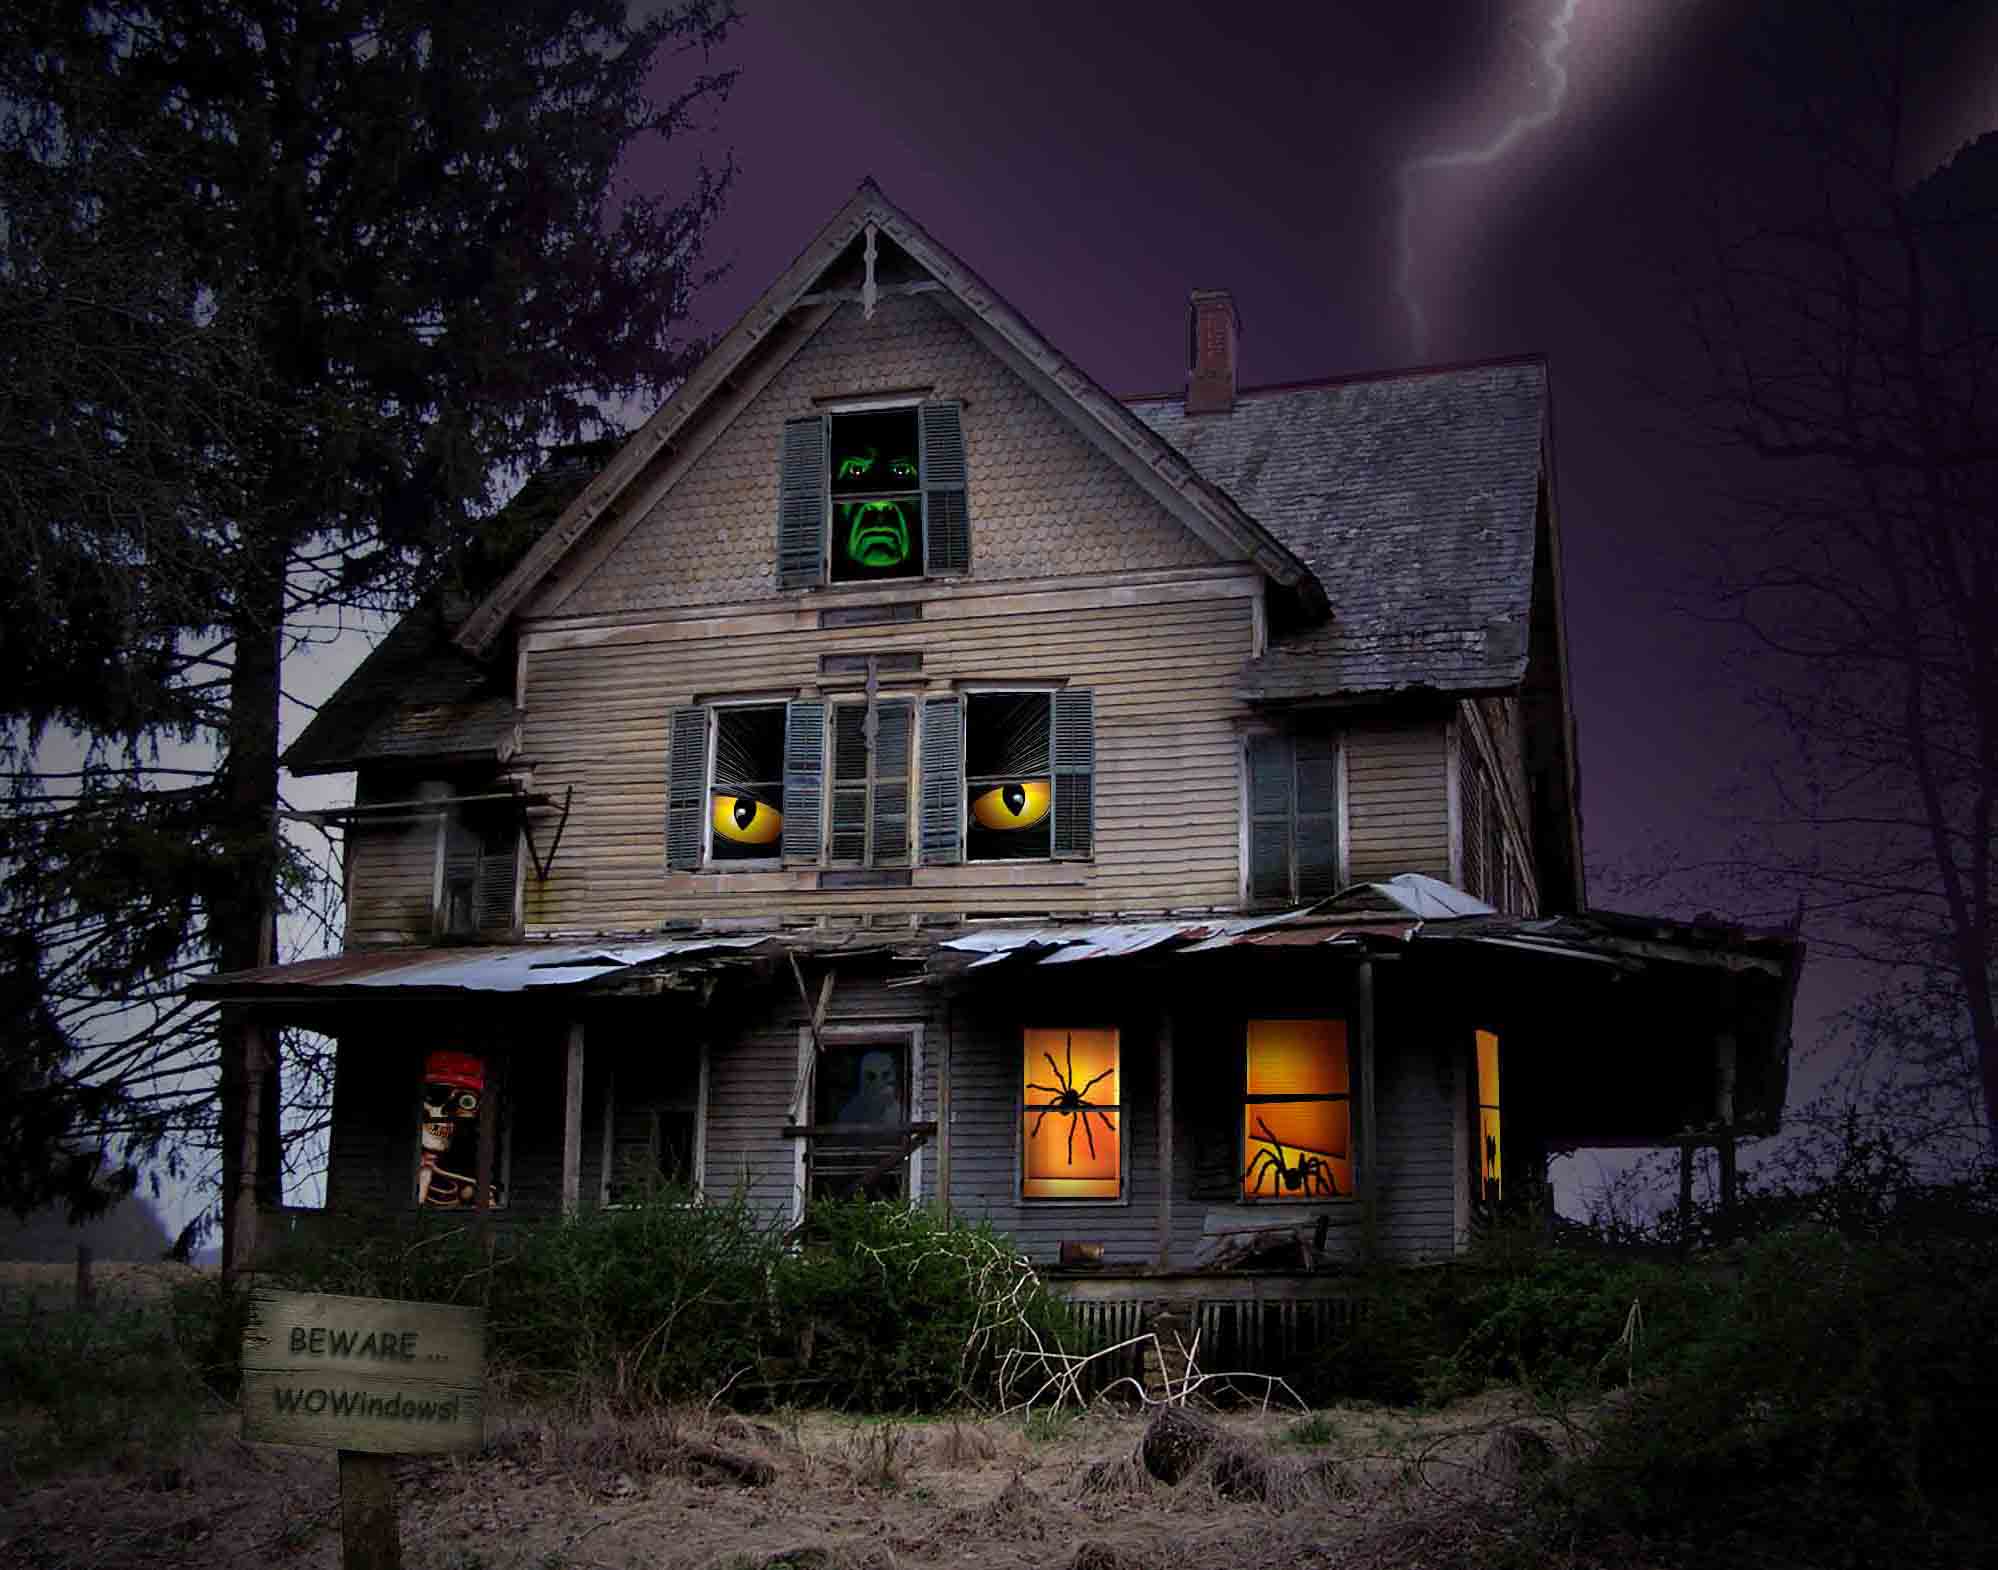 Download Halloween Haunted House